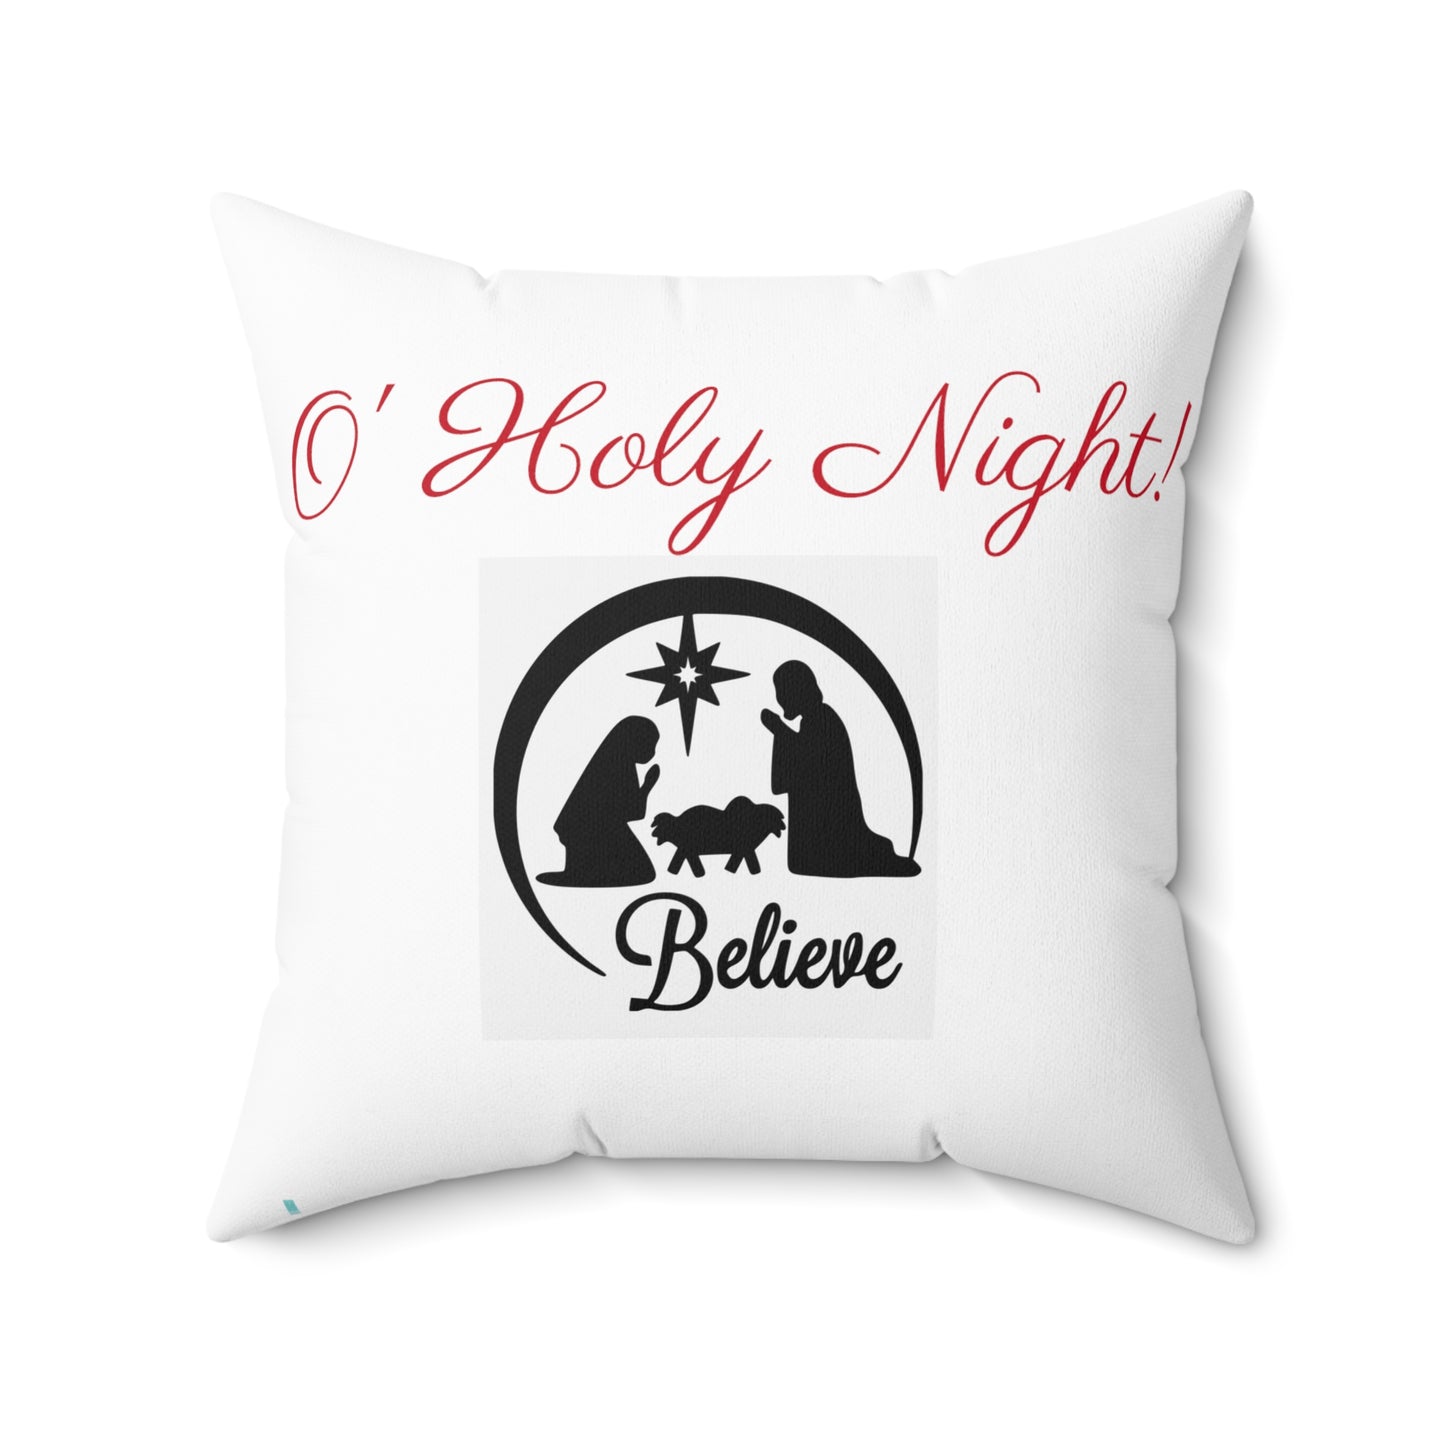 O' Holy Night! Spun Polyester Square Pillow